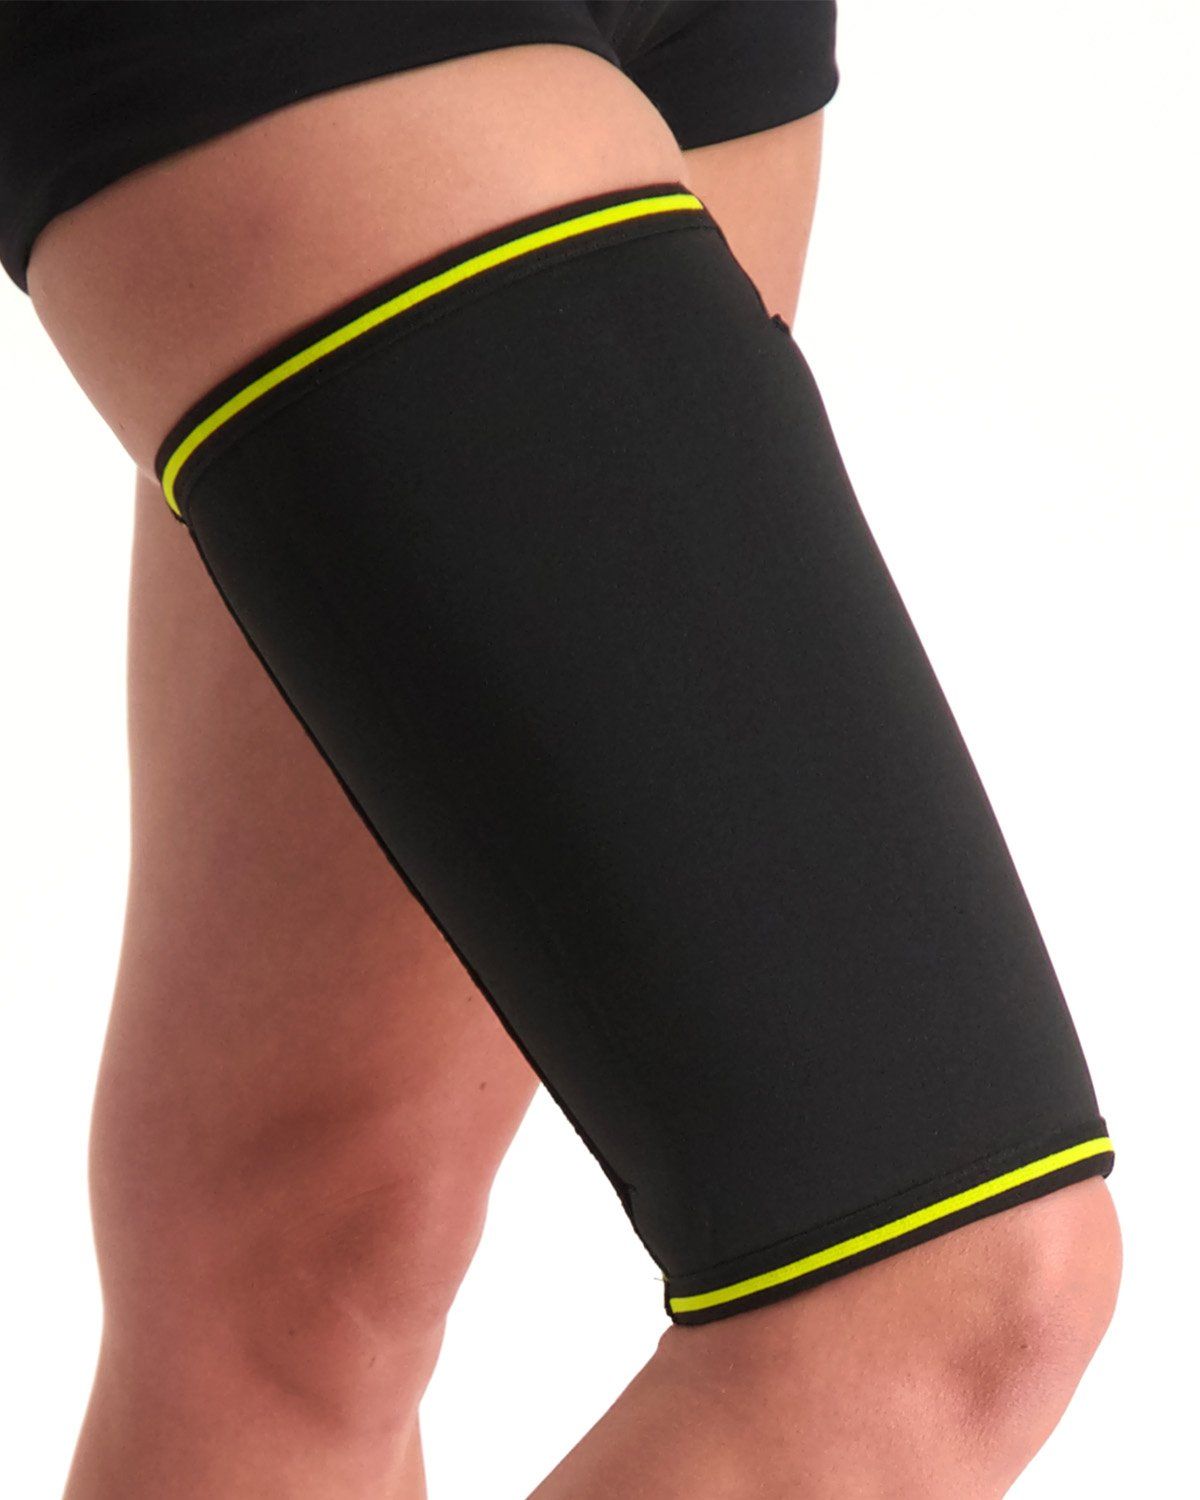 novamed thigh support for sale